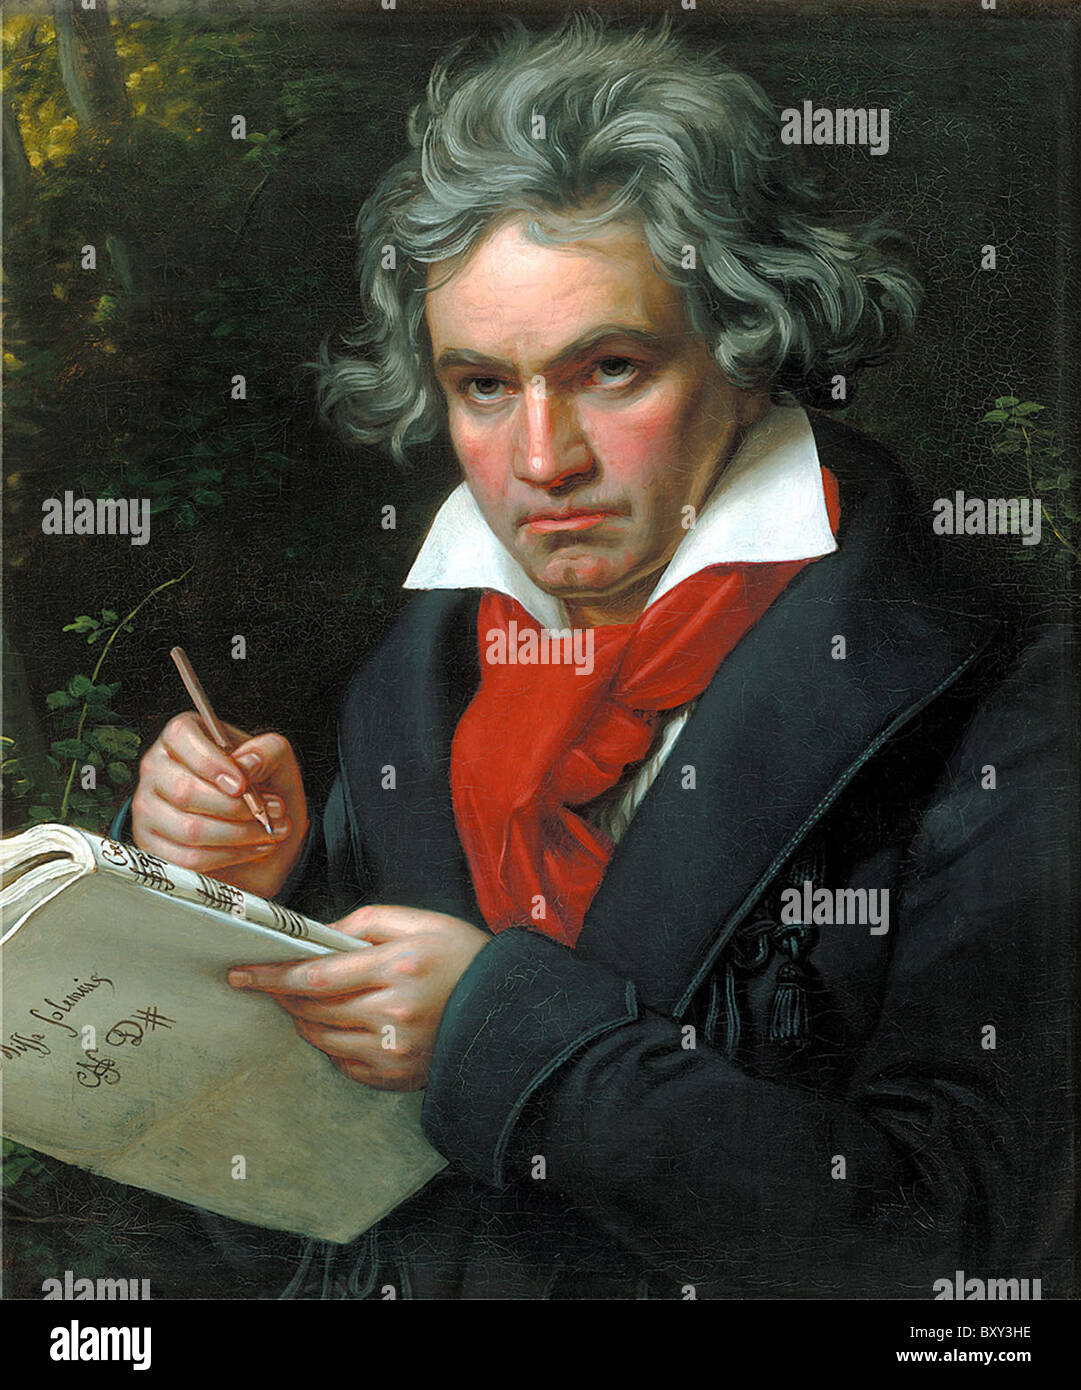 Beethoven, Ludwig van Beethoven, German composer and pianist. Stock Photo